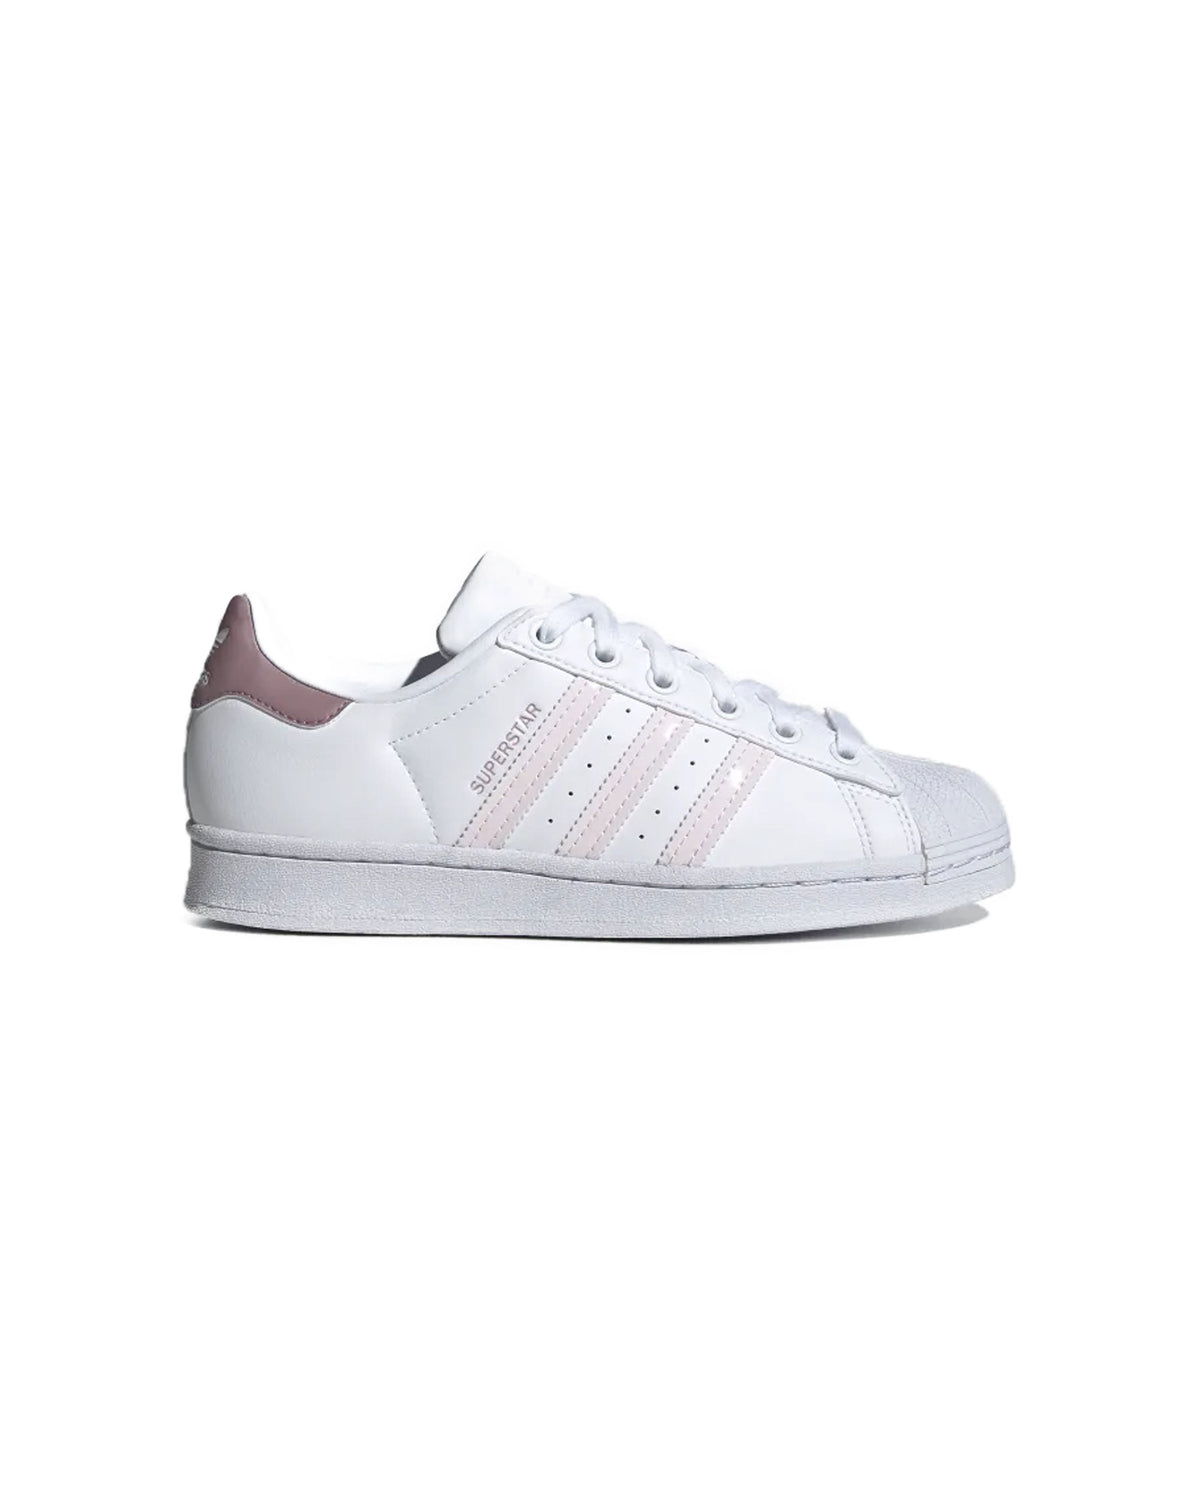 Adidas Superstar J White Pink